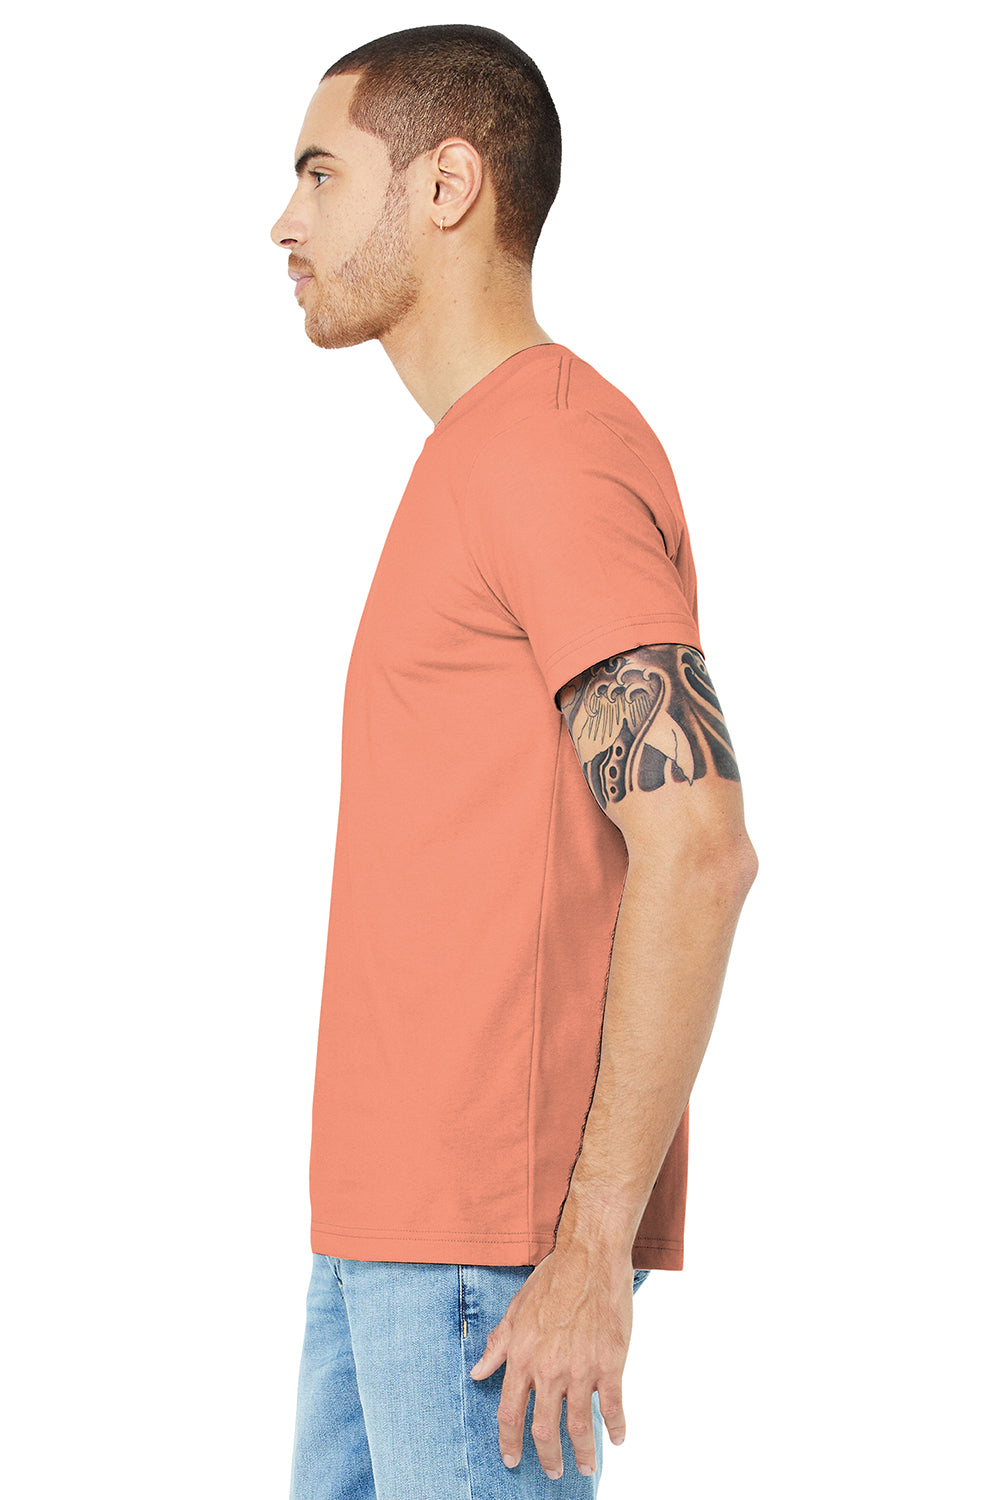 Bella + Canvas BC3001/3001C Mens Jersey Short Sleeve Crewneck T-Shirt Sunset Orange Model Side